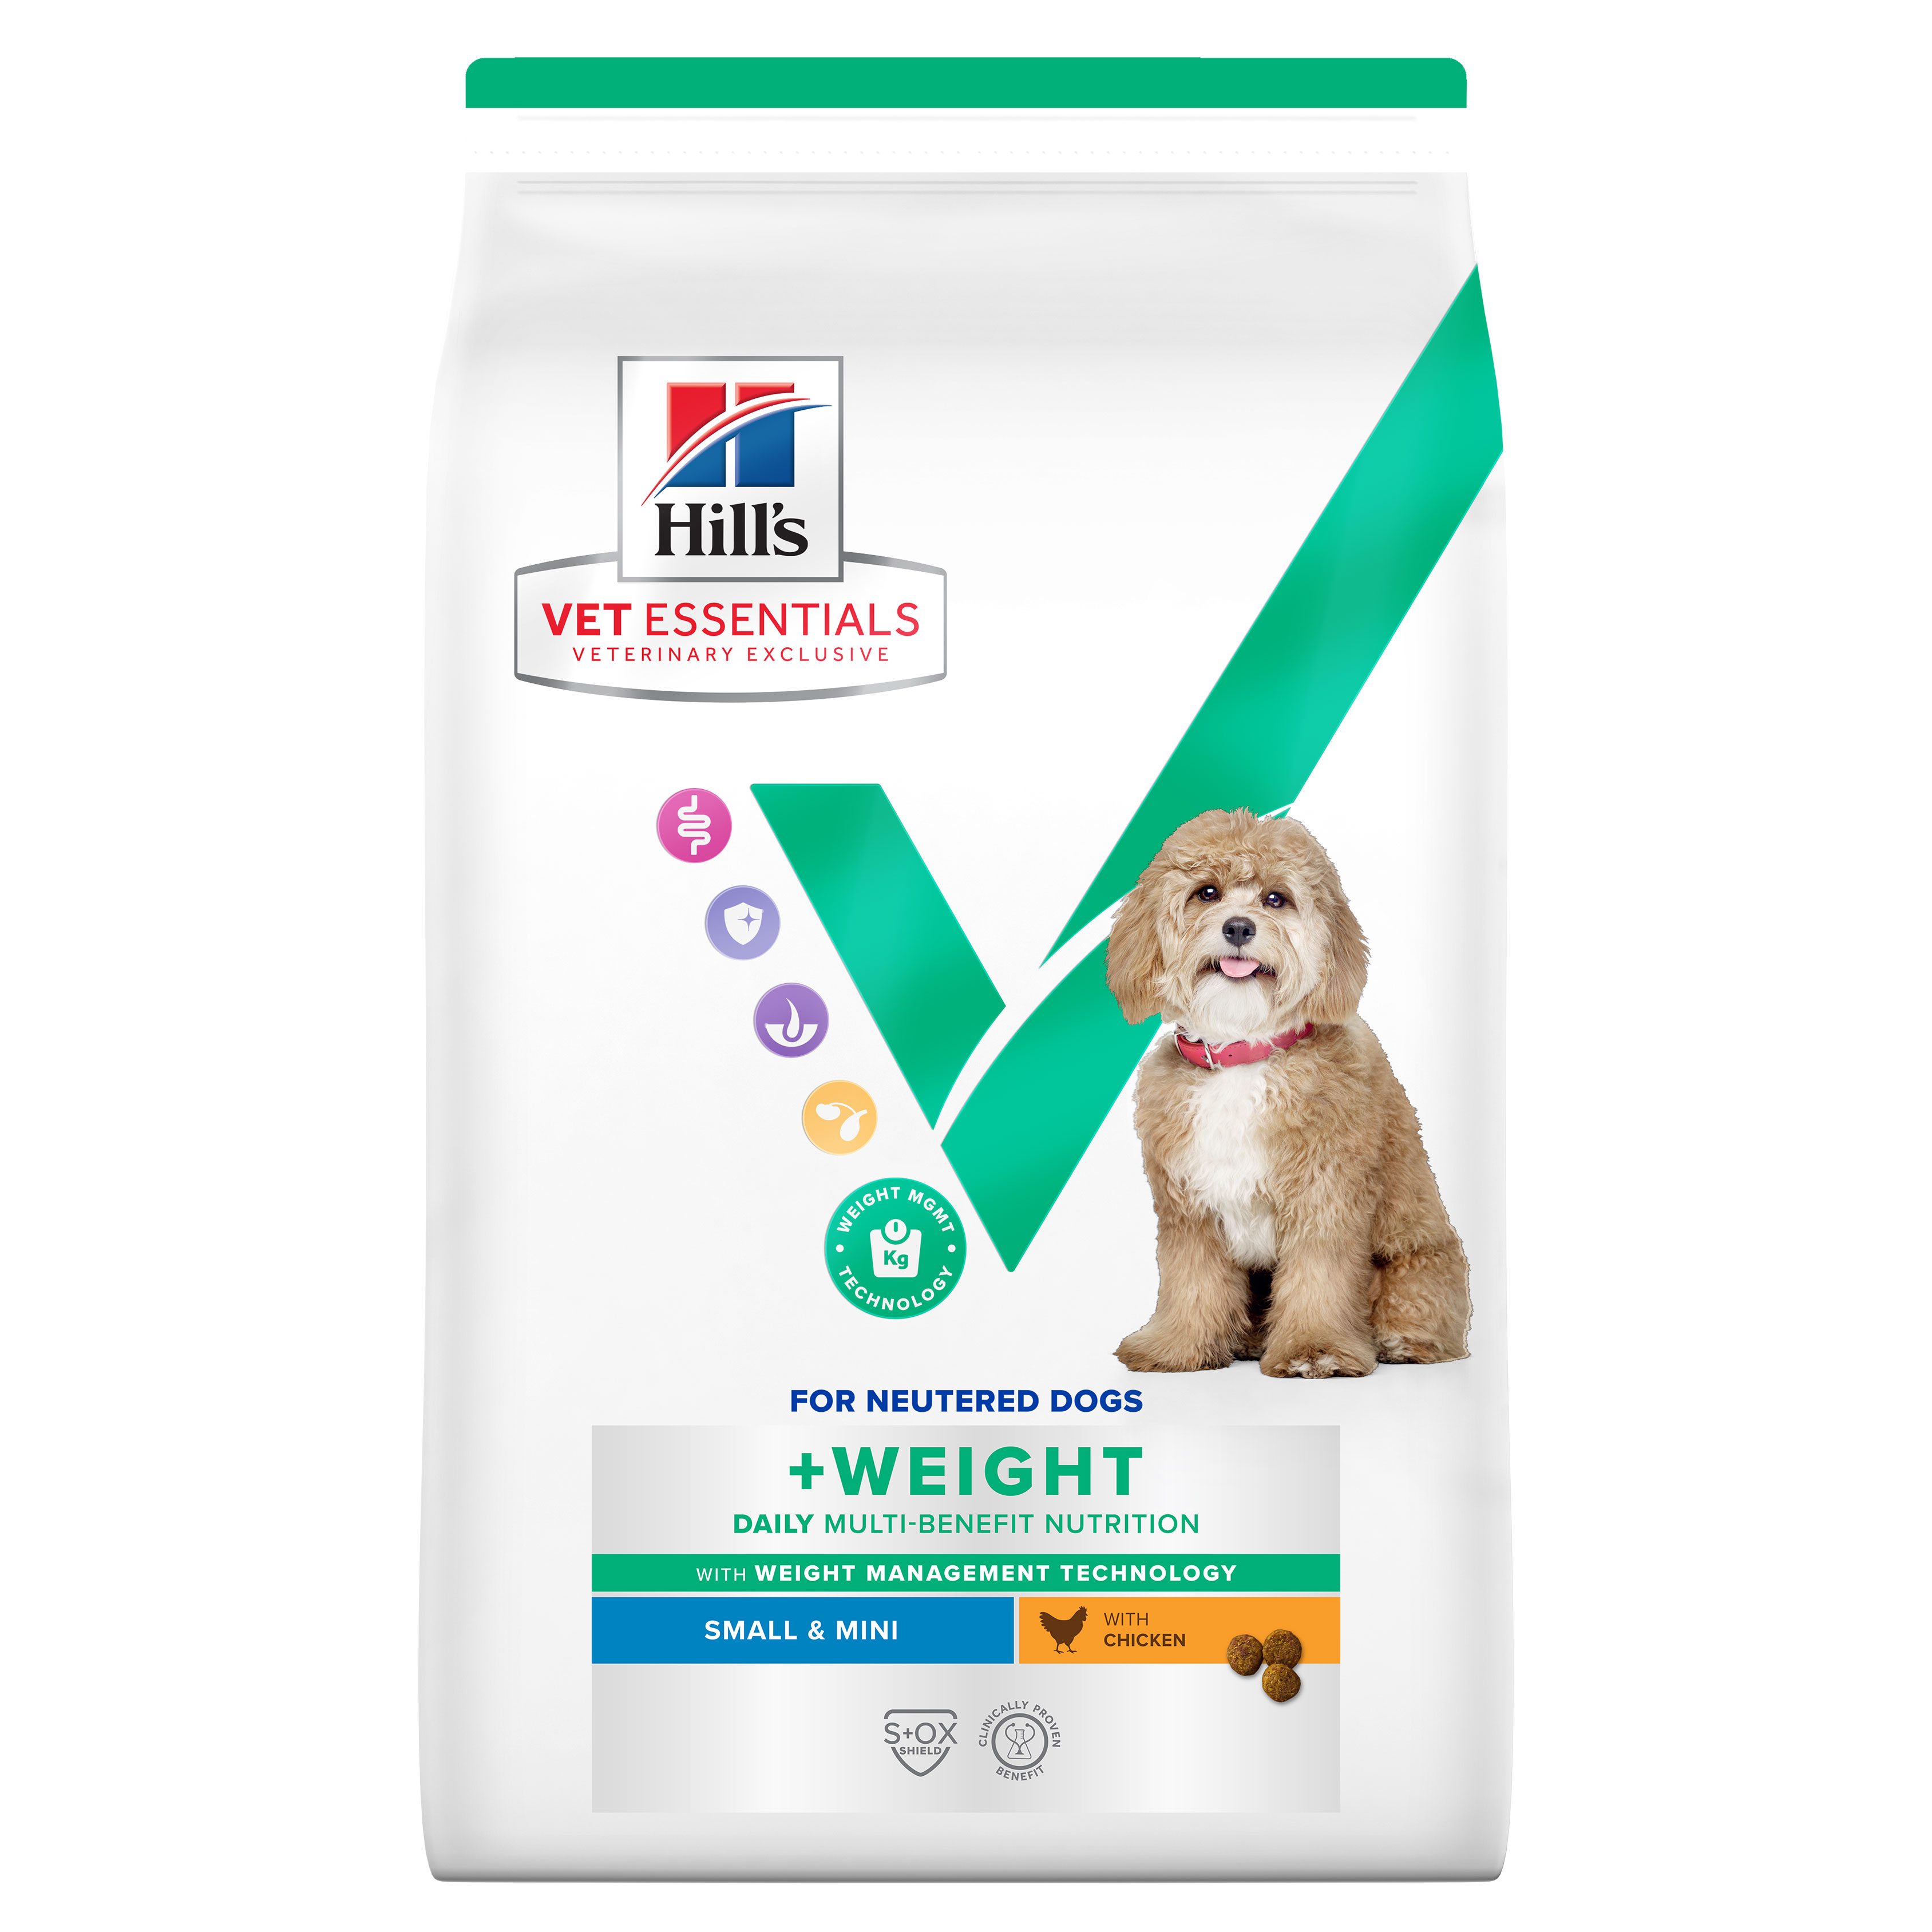 Hill's Vet Essentials מולטי בנפיט כלב בוגר ג.קטן ומיניאטורי,שמירה על המשקל,2 ק"ג